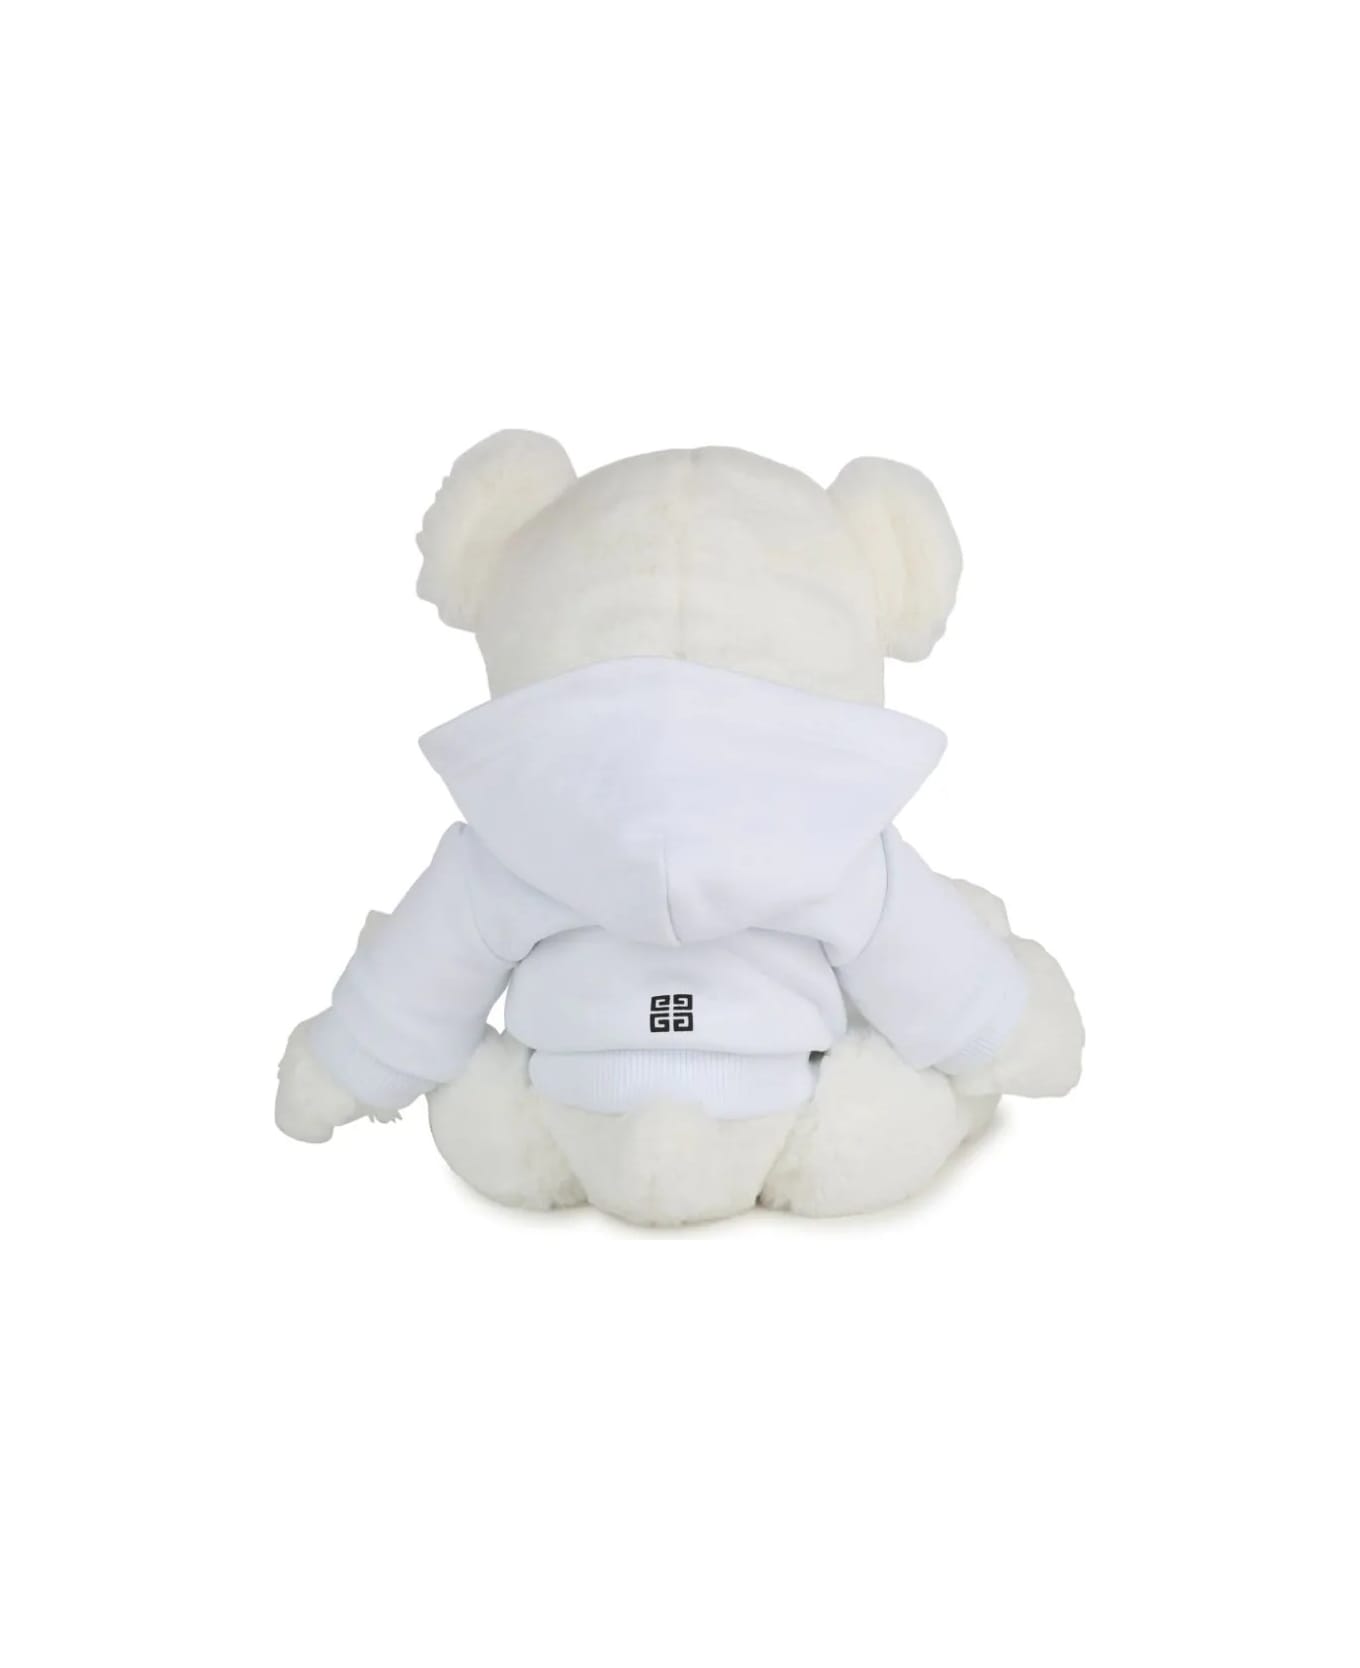 Givenchy White Givenchy Teddy Bear Plush - Bianco アクセサリー＆ギフト